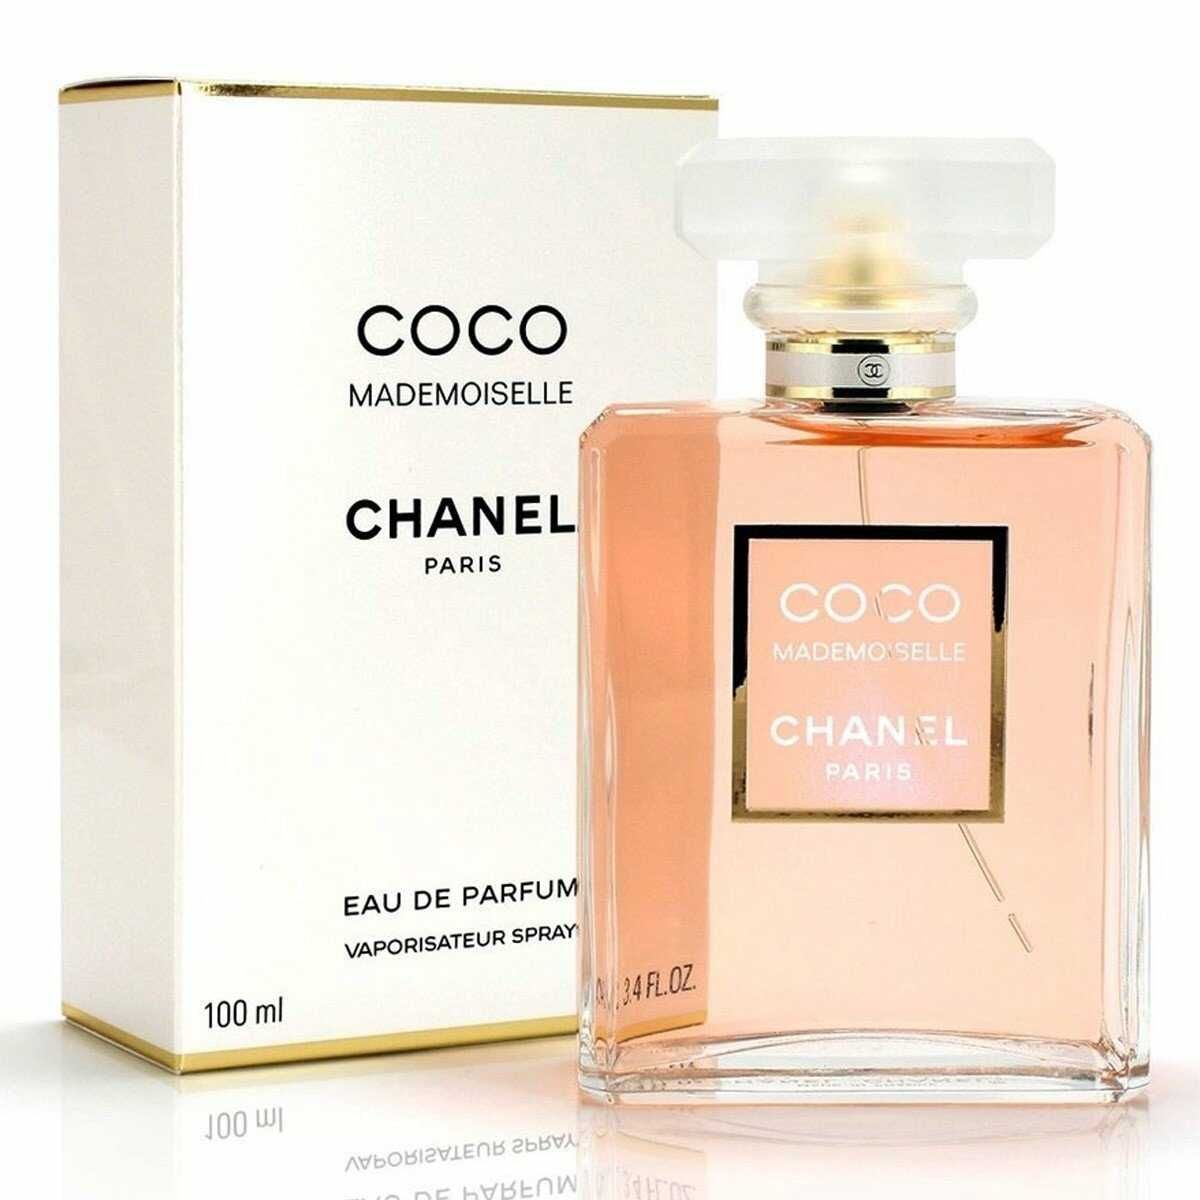 Chi tiết 74 perfume chanel cocoon mademoiselle siêu đỉnh  trieuson5